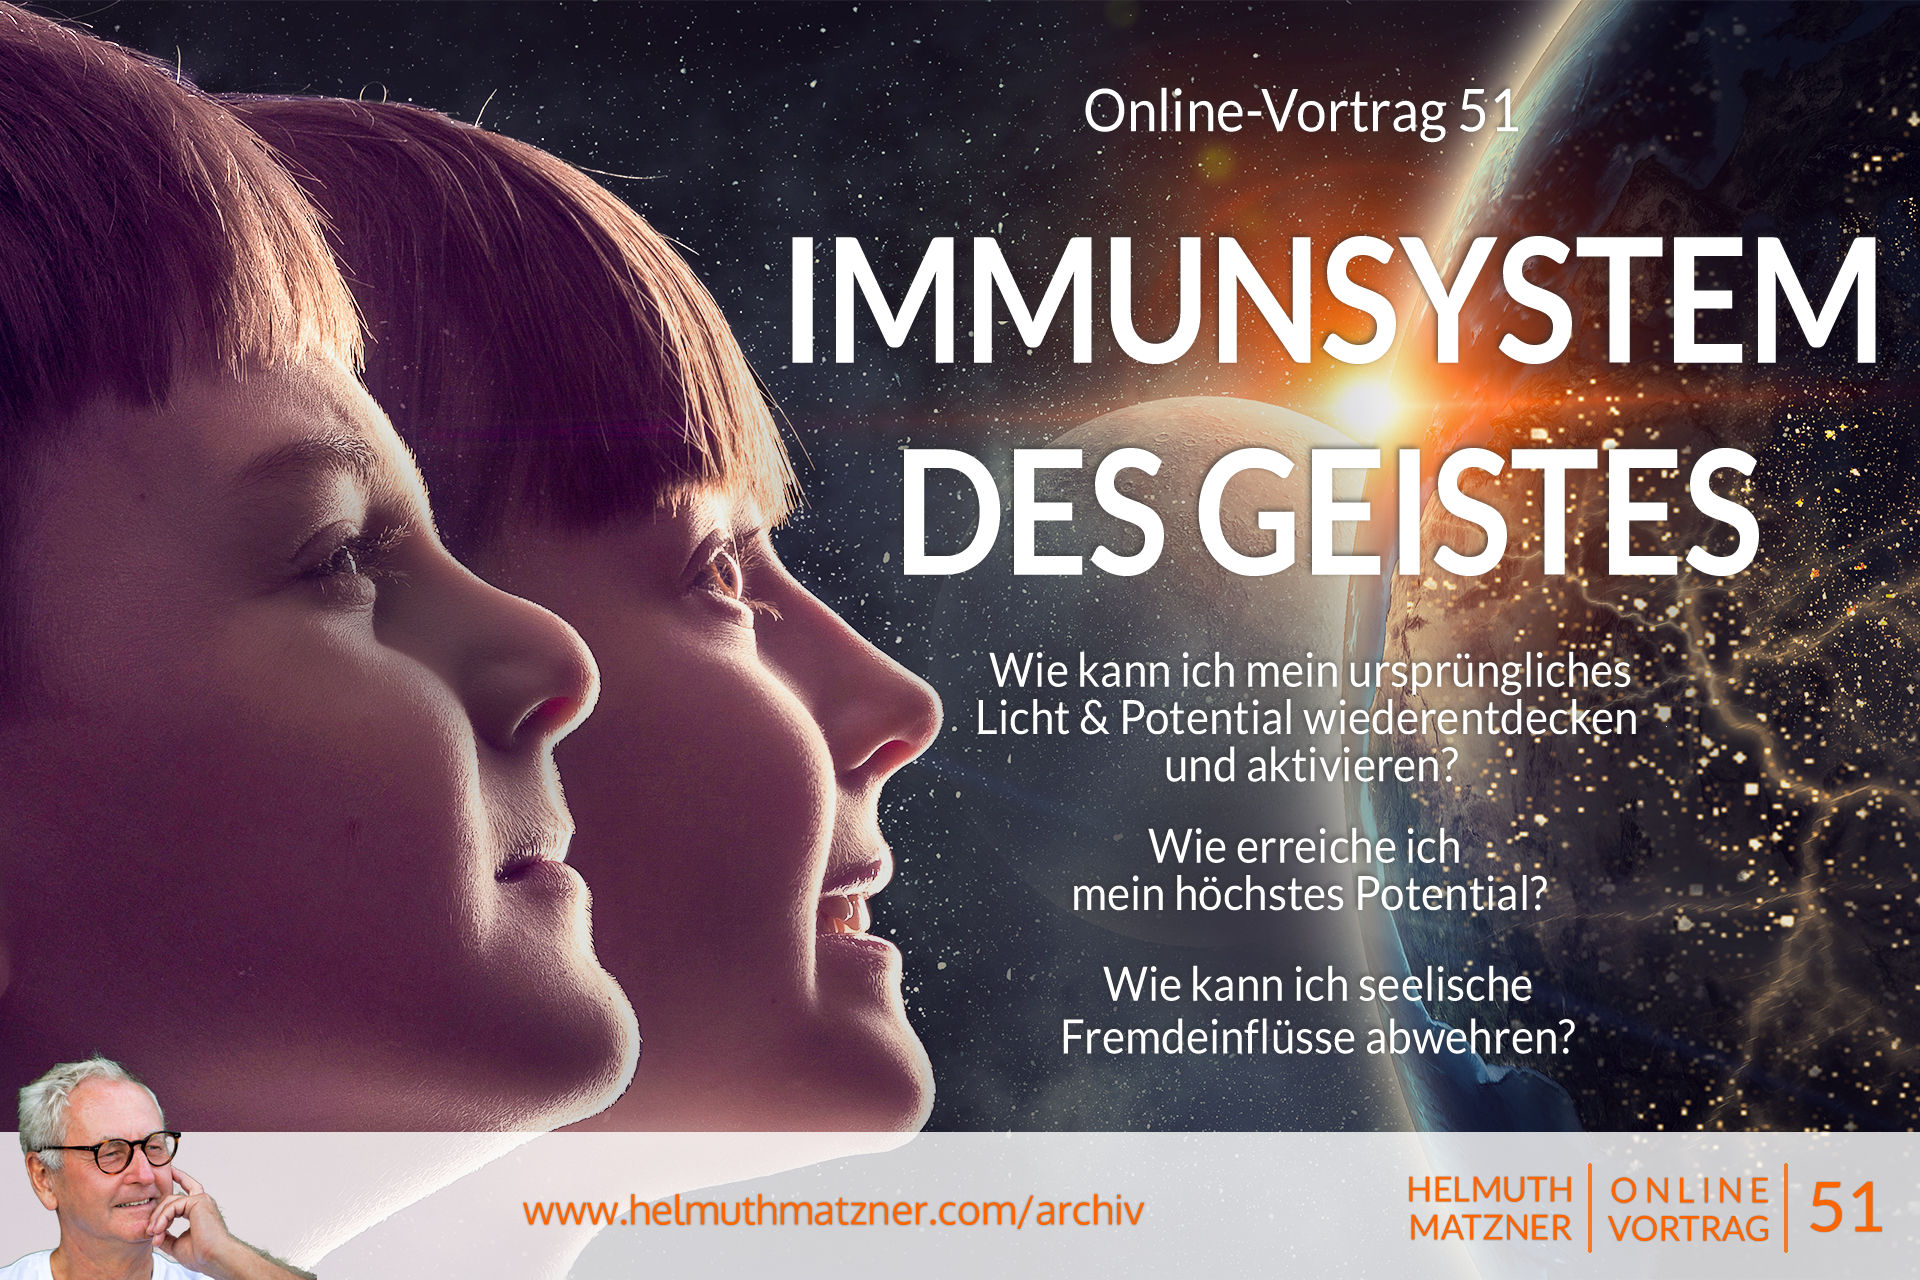 Helmuth Matzner - Online-Vortrag 51 - Immunsystem des Geistes - Archiv v05B